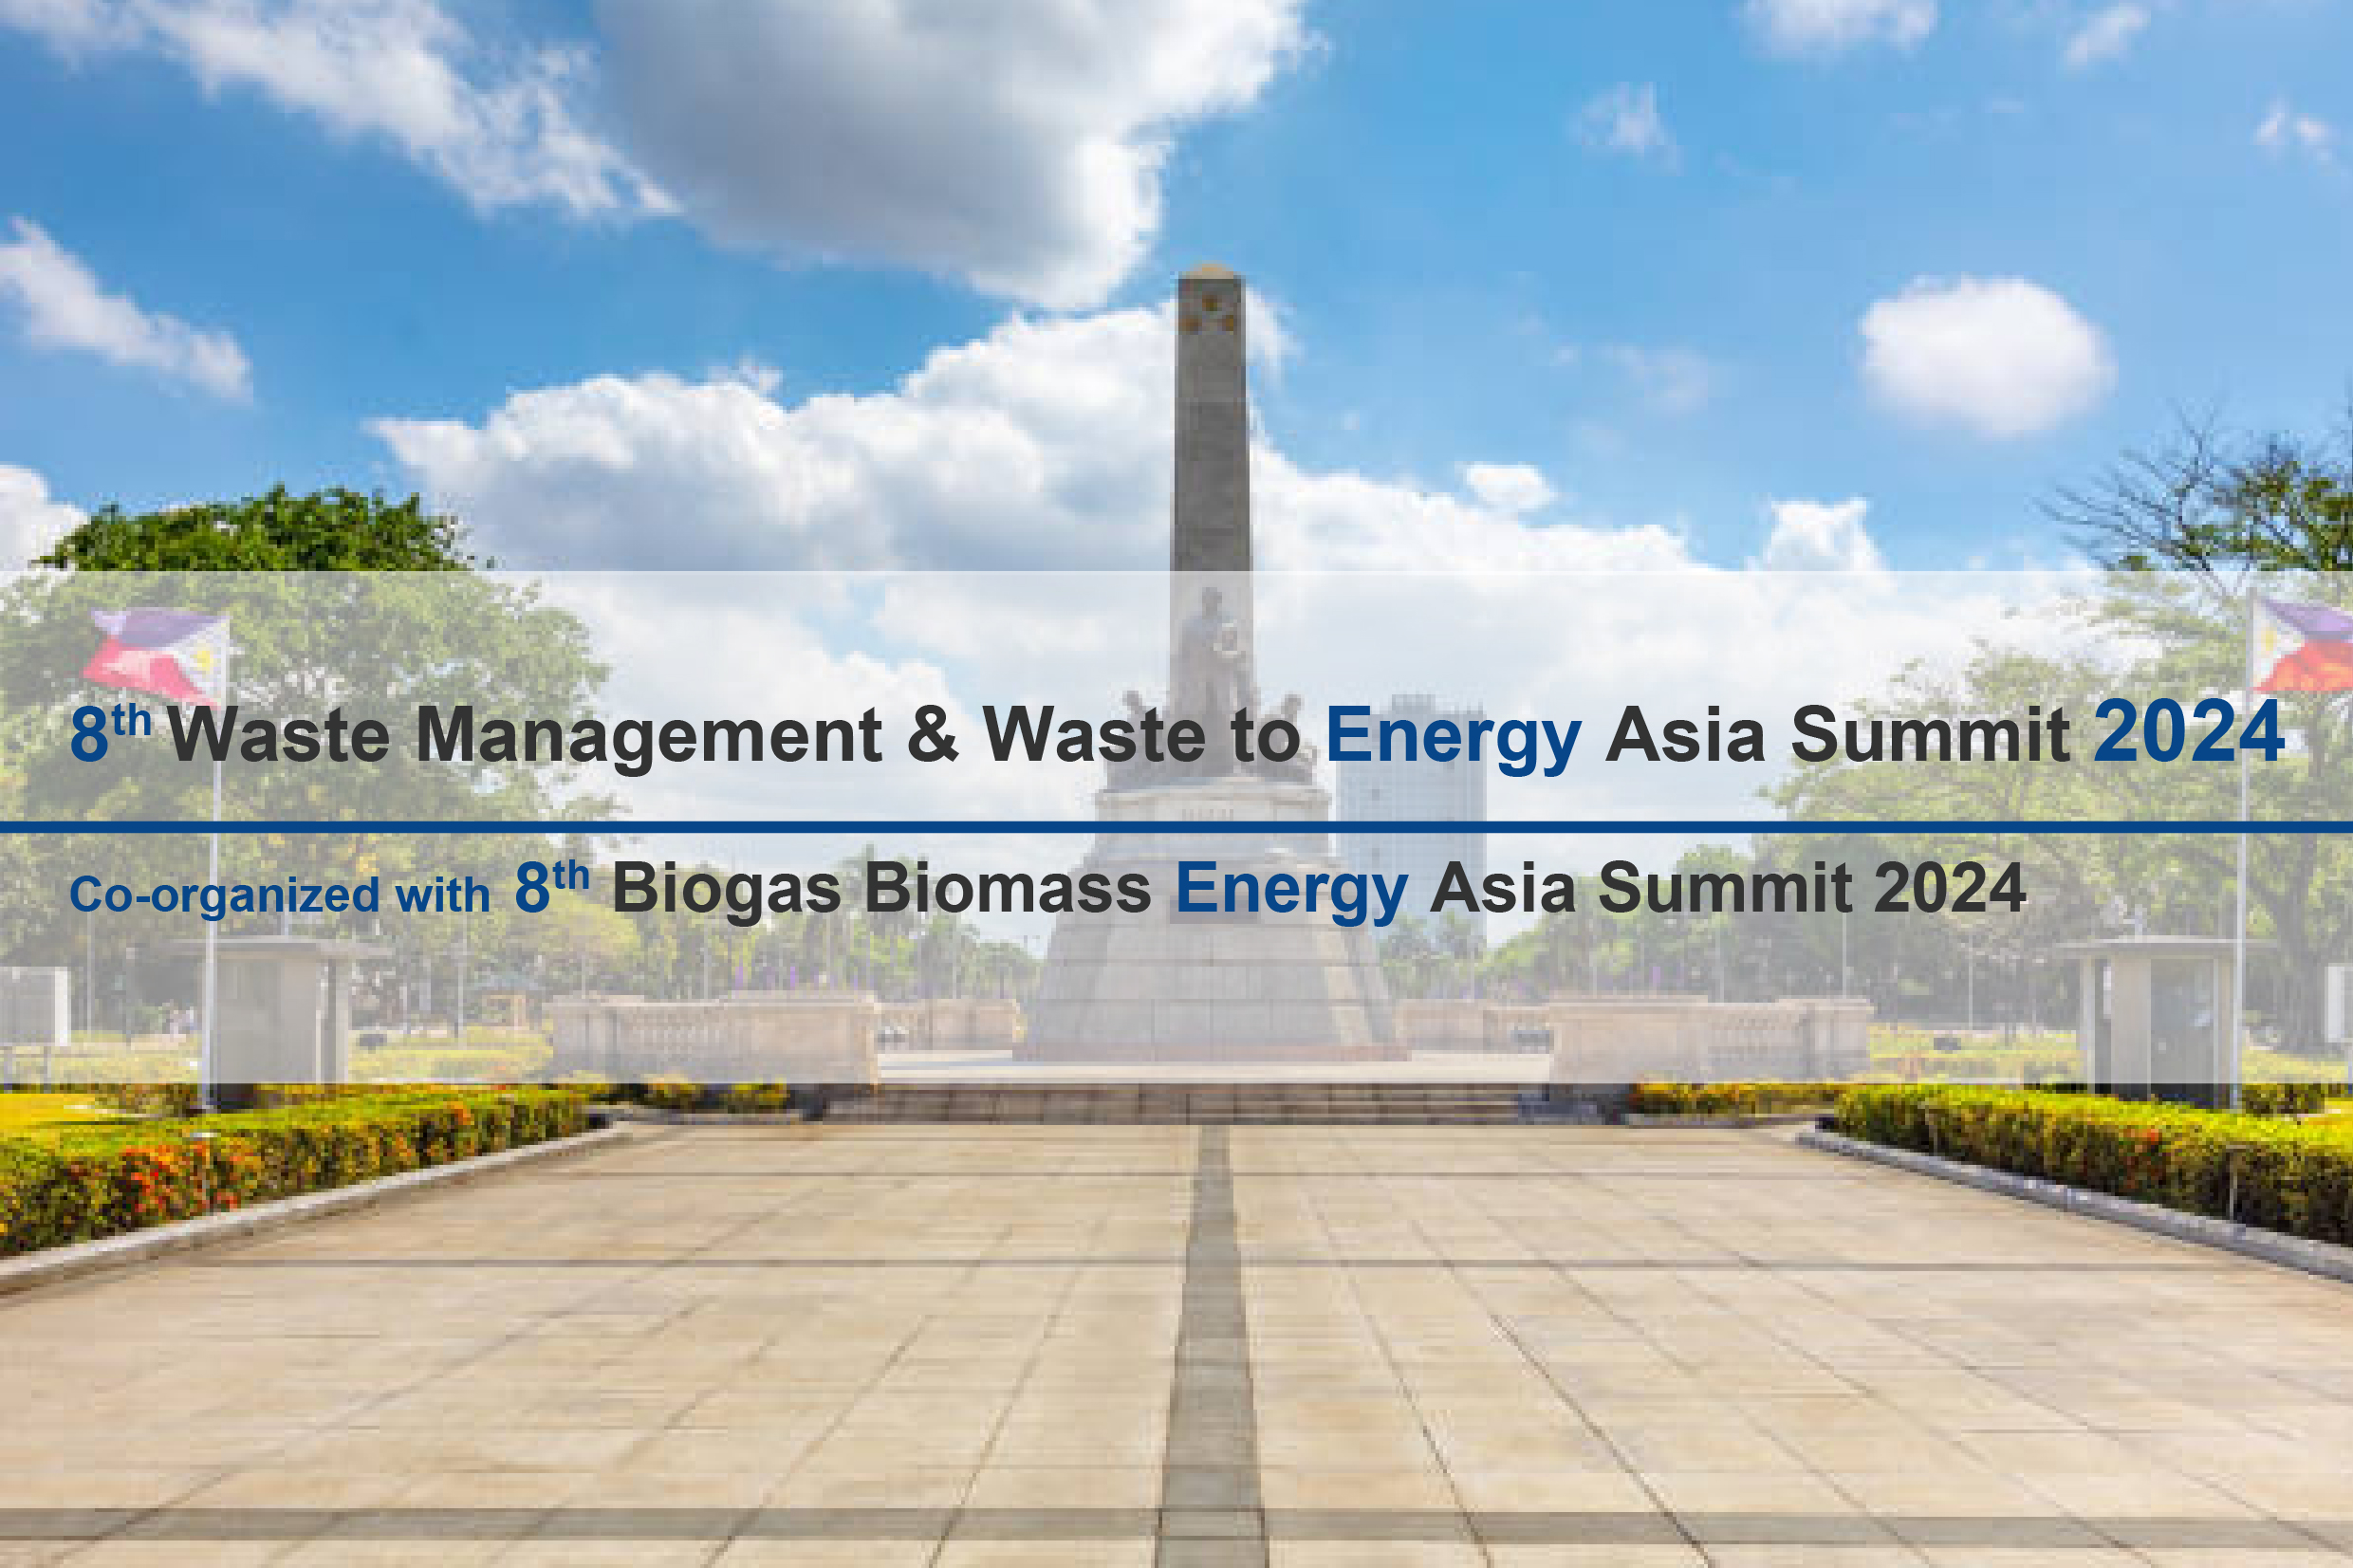 Waste to Energy Asia Summit 2024 Philippines Focus